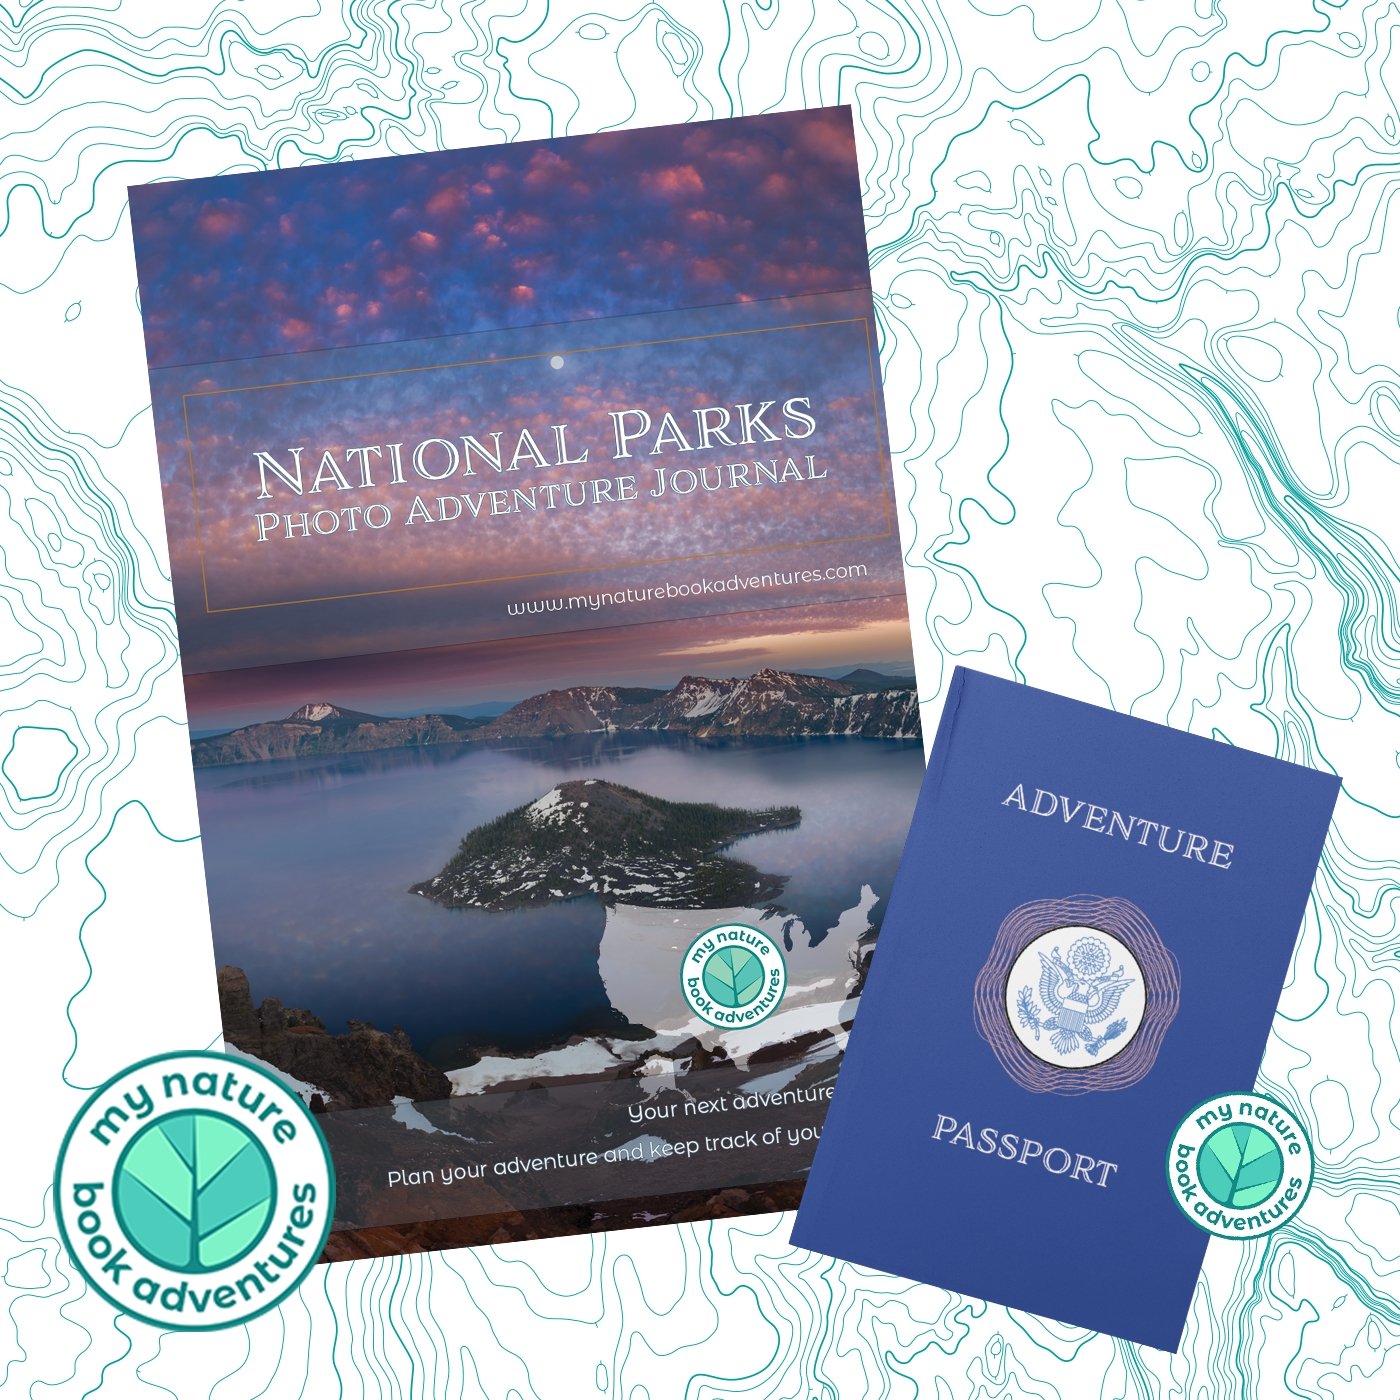 National Park Photo Adventure Journal + Adventure Passport - My Nature Book Adventures